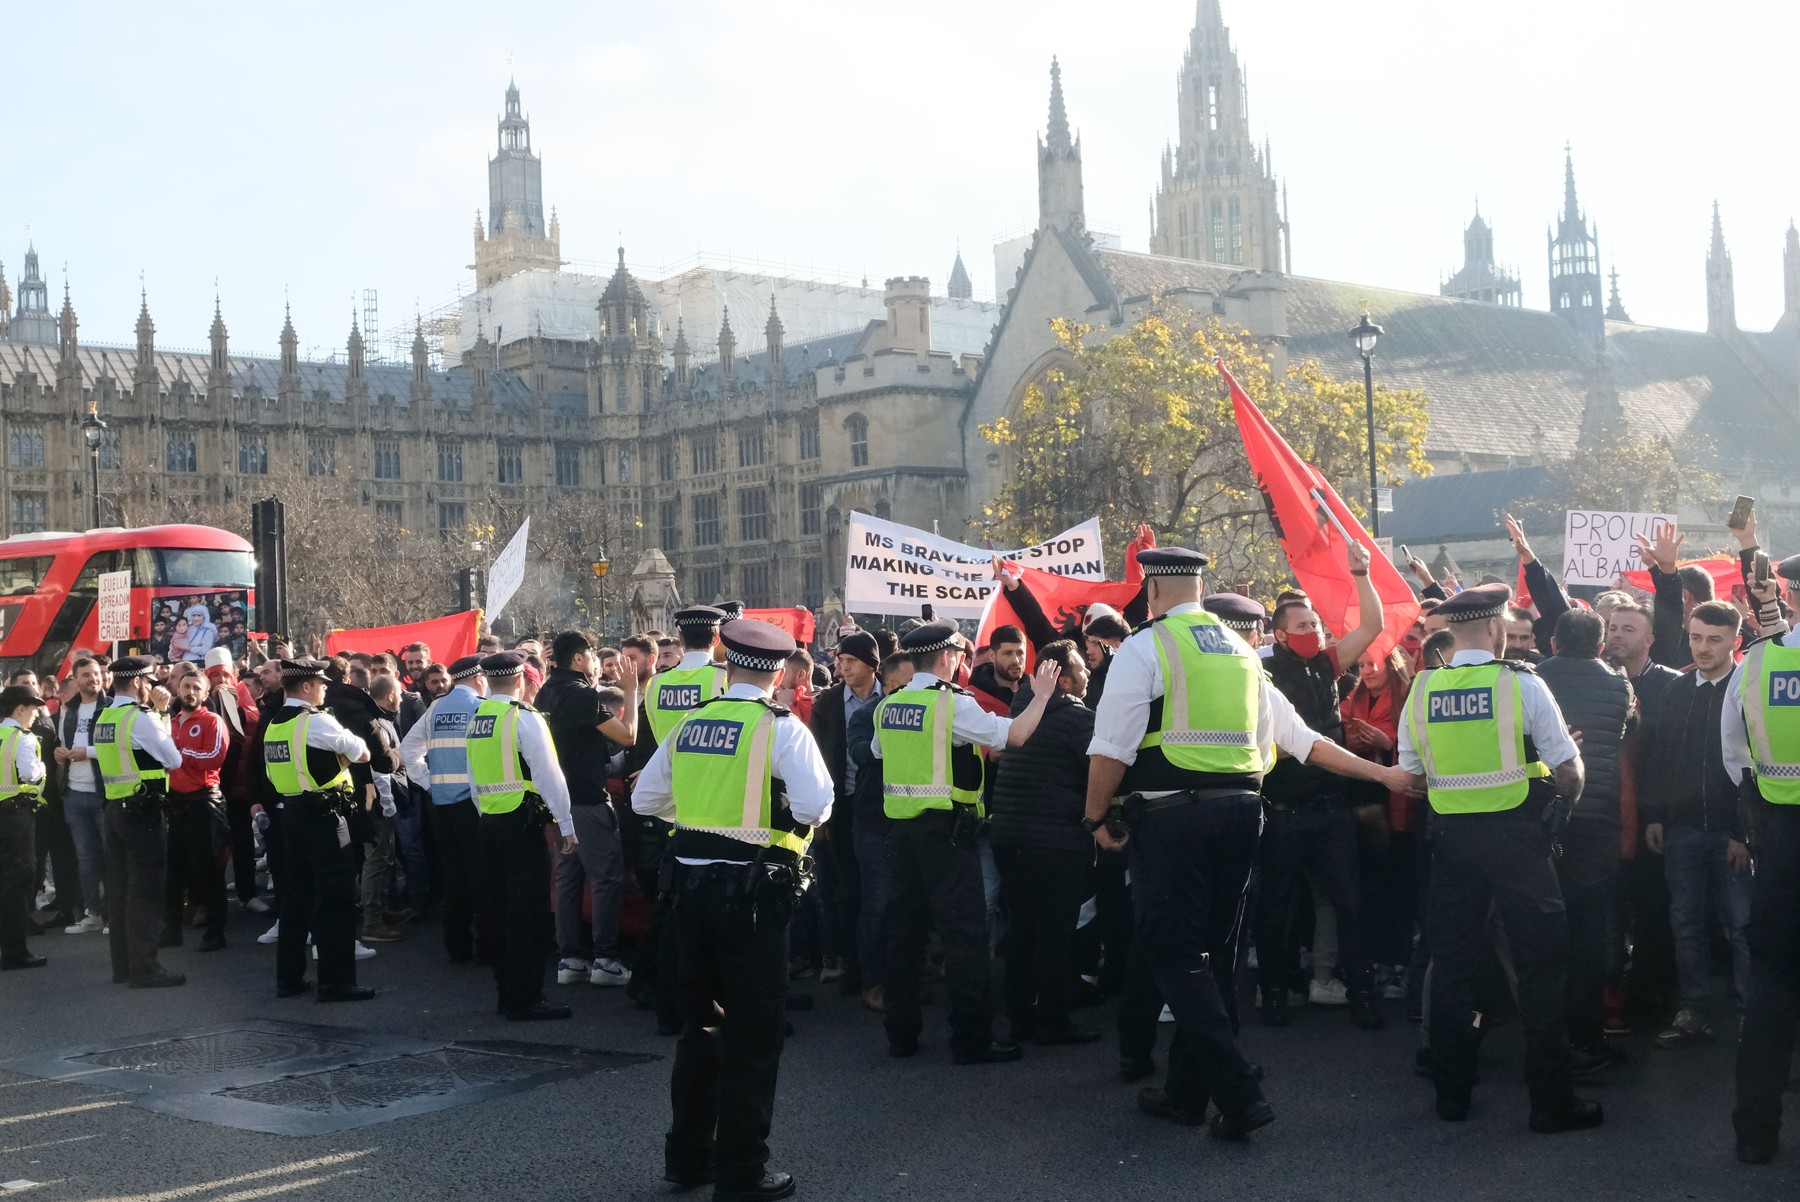 Albanci, protest, Engleska